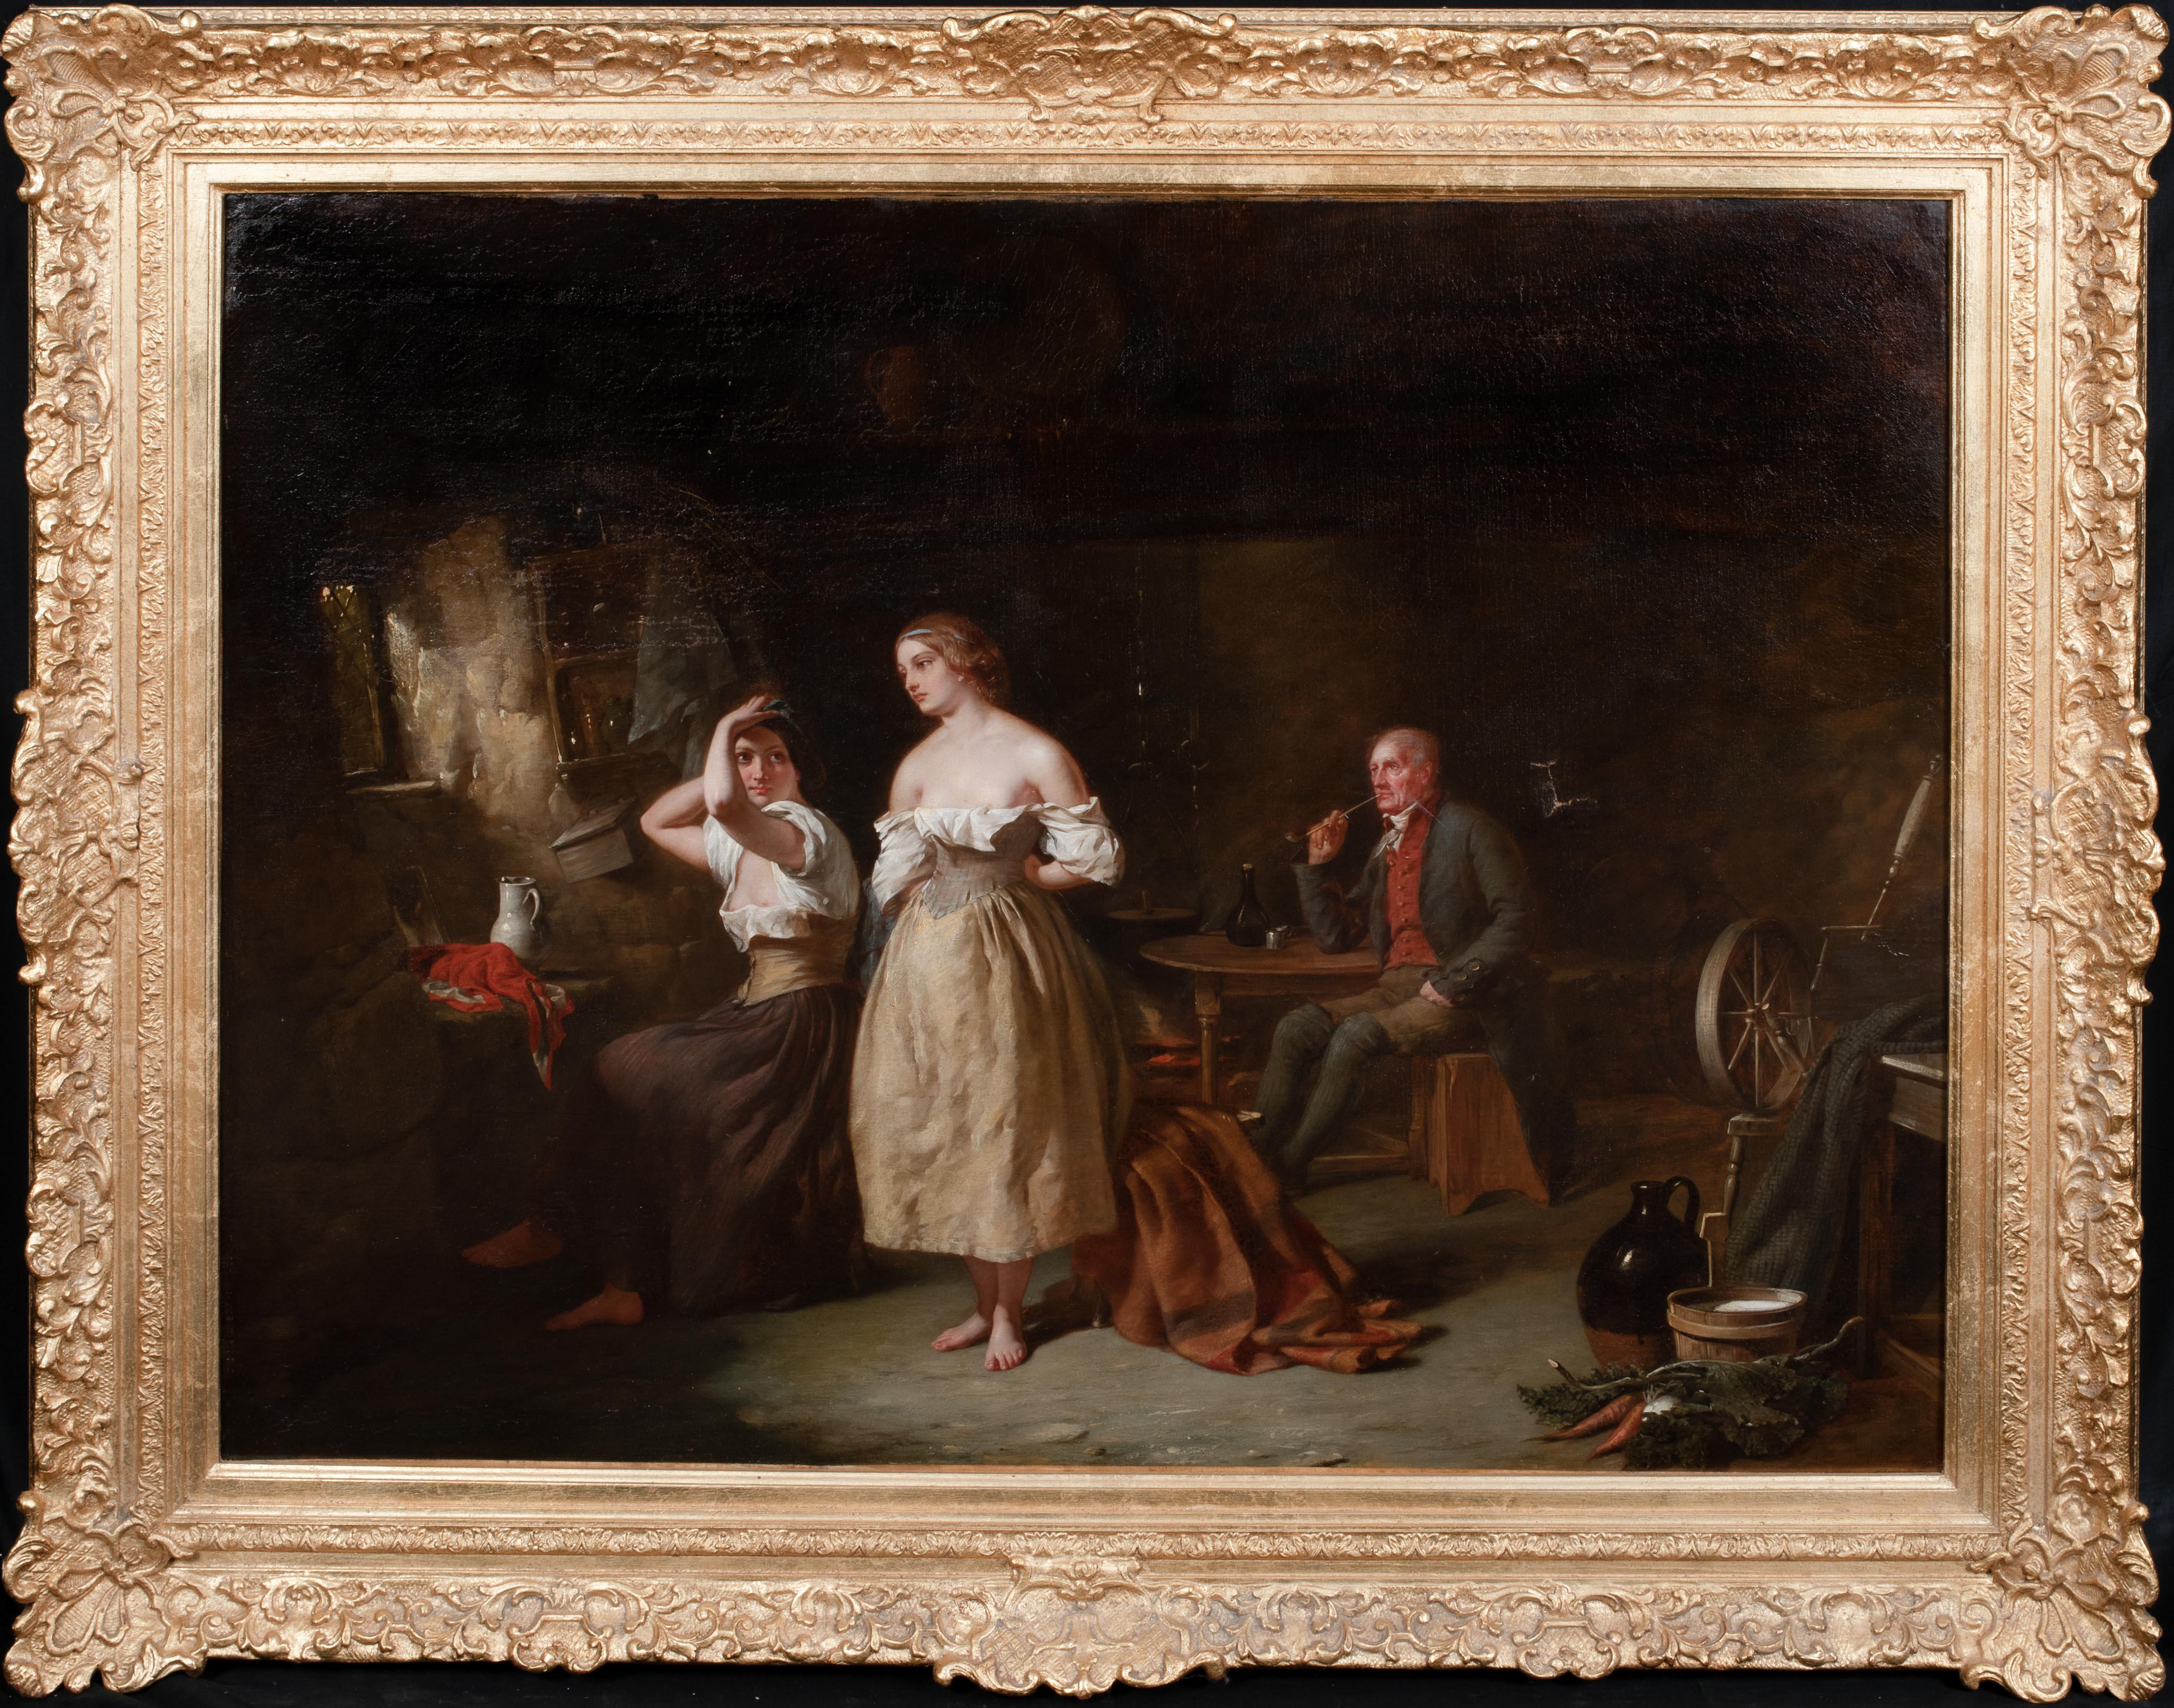 Unknown Portrait Painting - Prostitutes & Pimp In A Brothel Interior, 19th Century